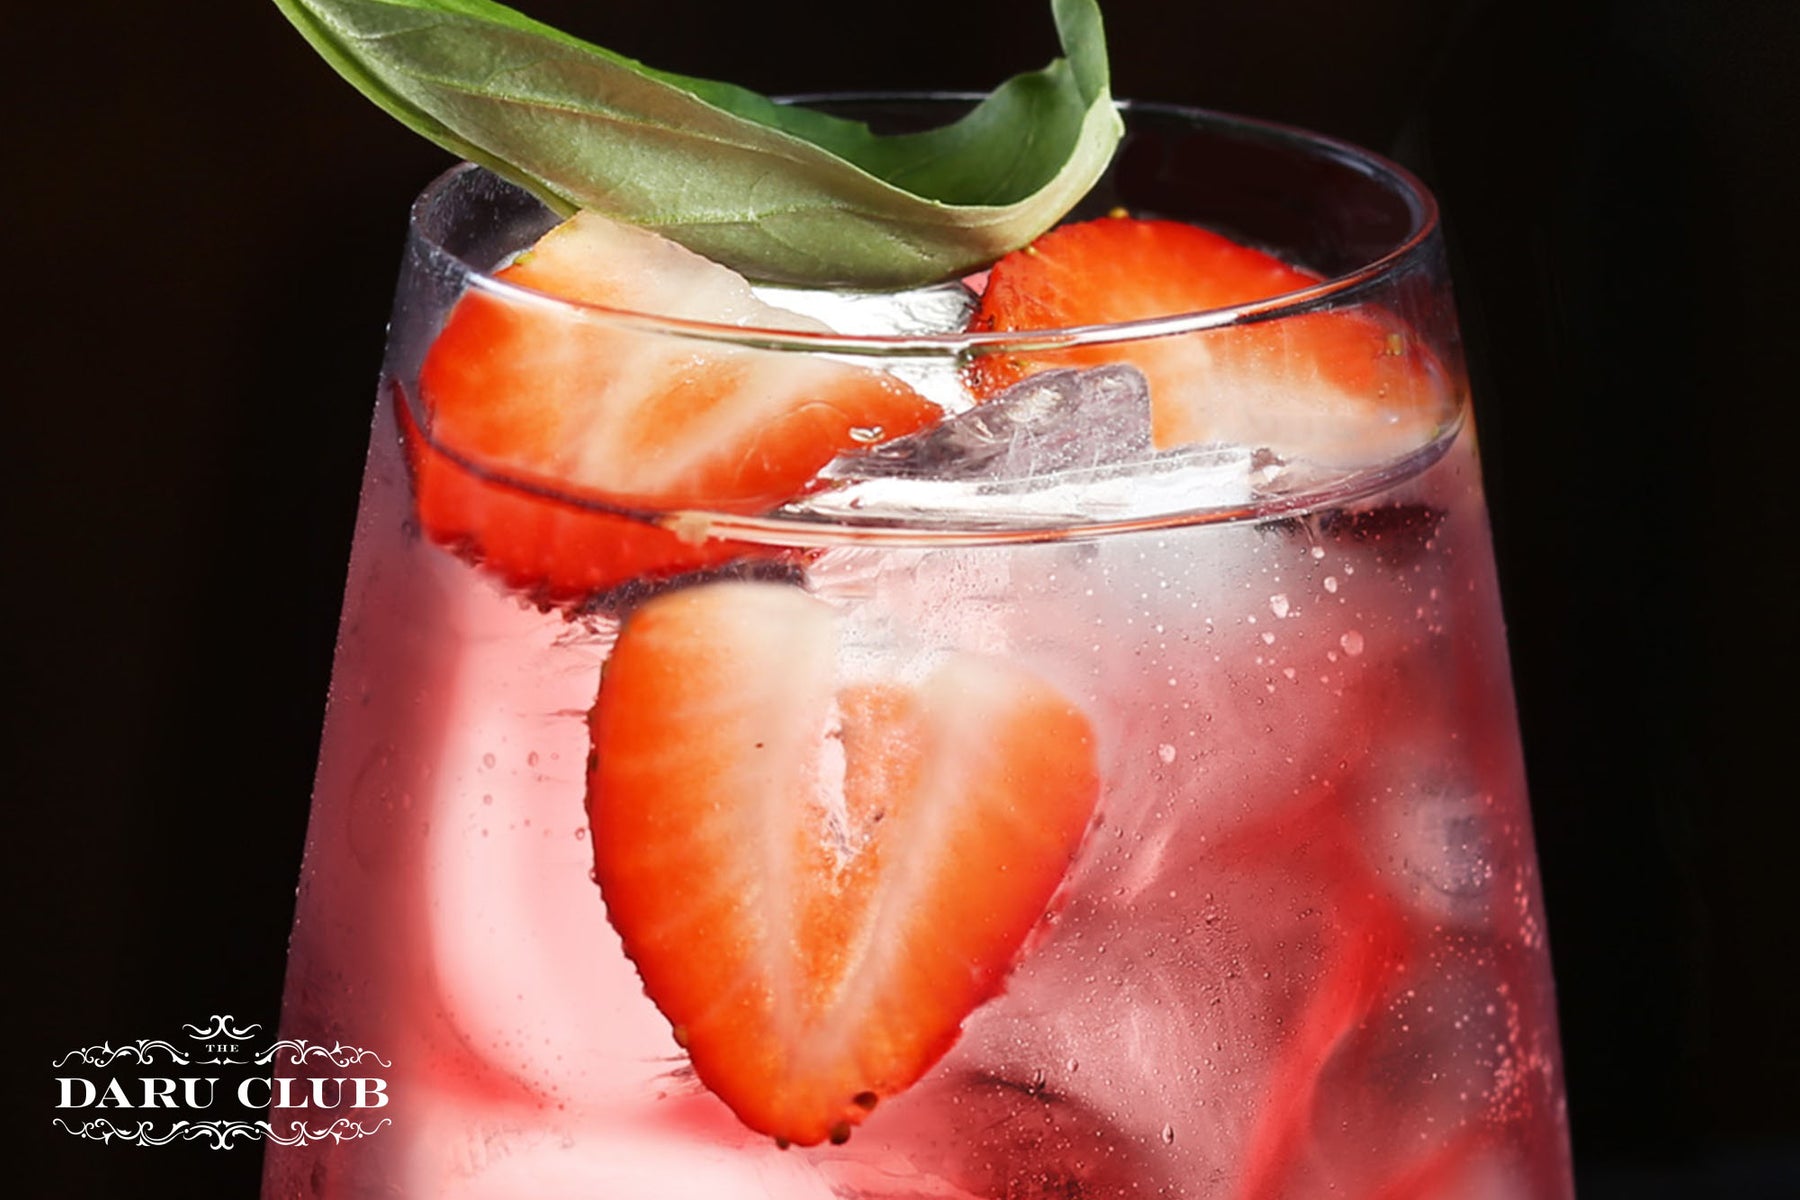 Rosa & Tonic cocktail - a traditional Italian aperitivo